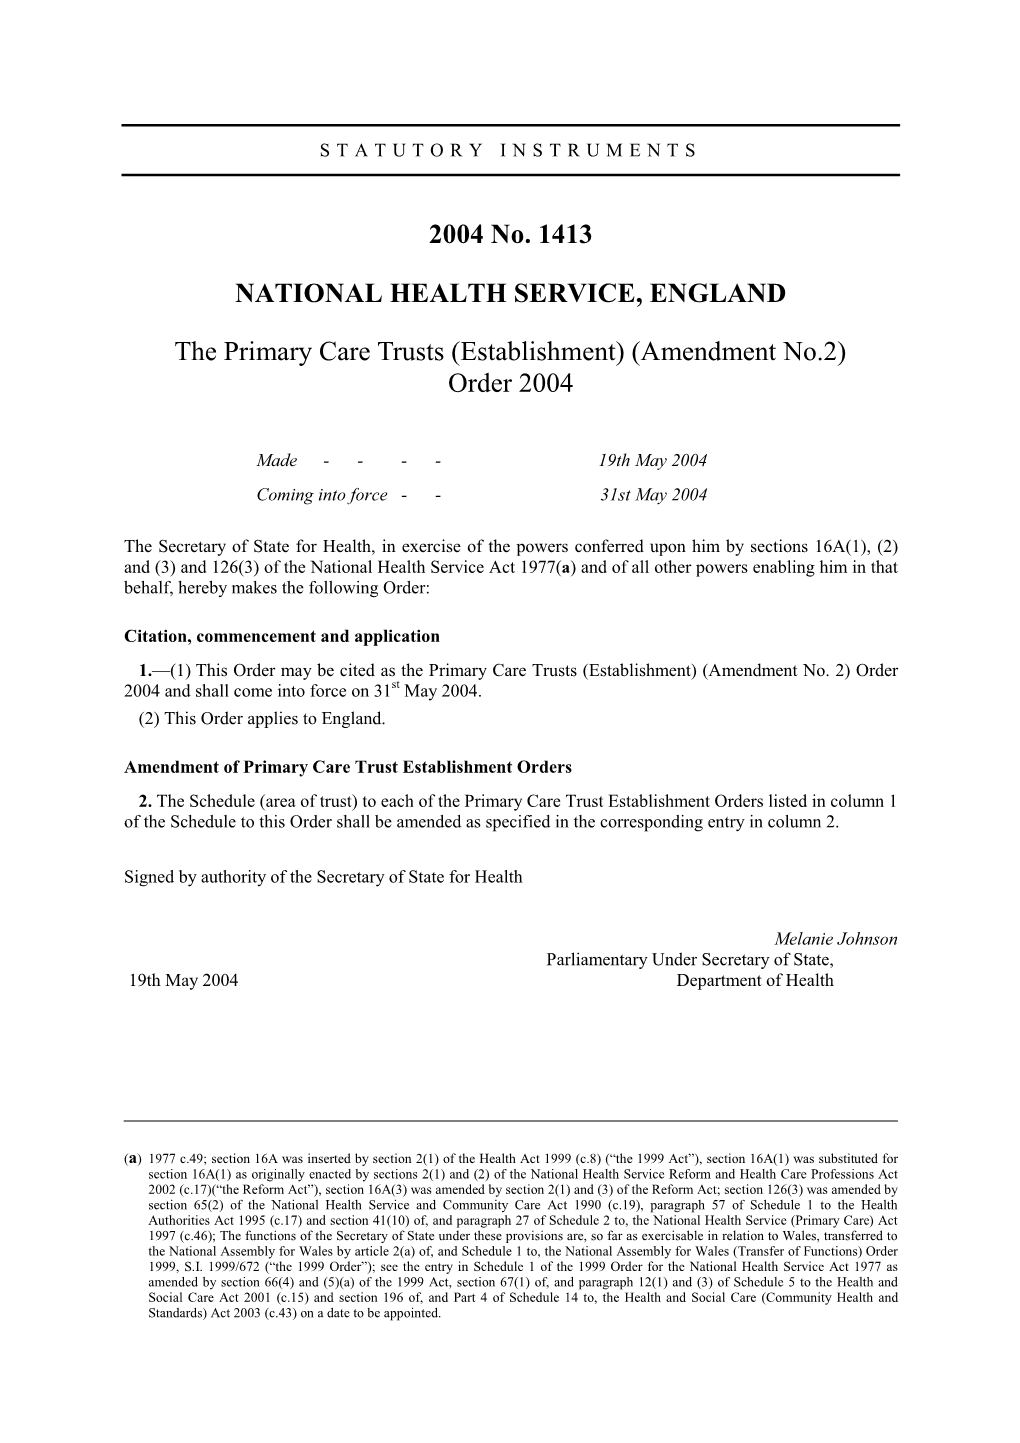 2004 No. 1413 NATIONAL HEALTH SERVICE